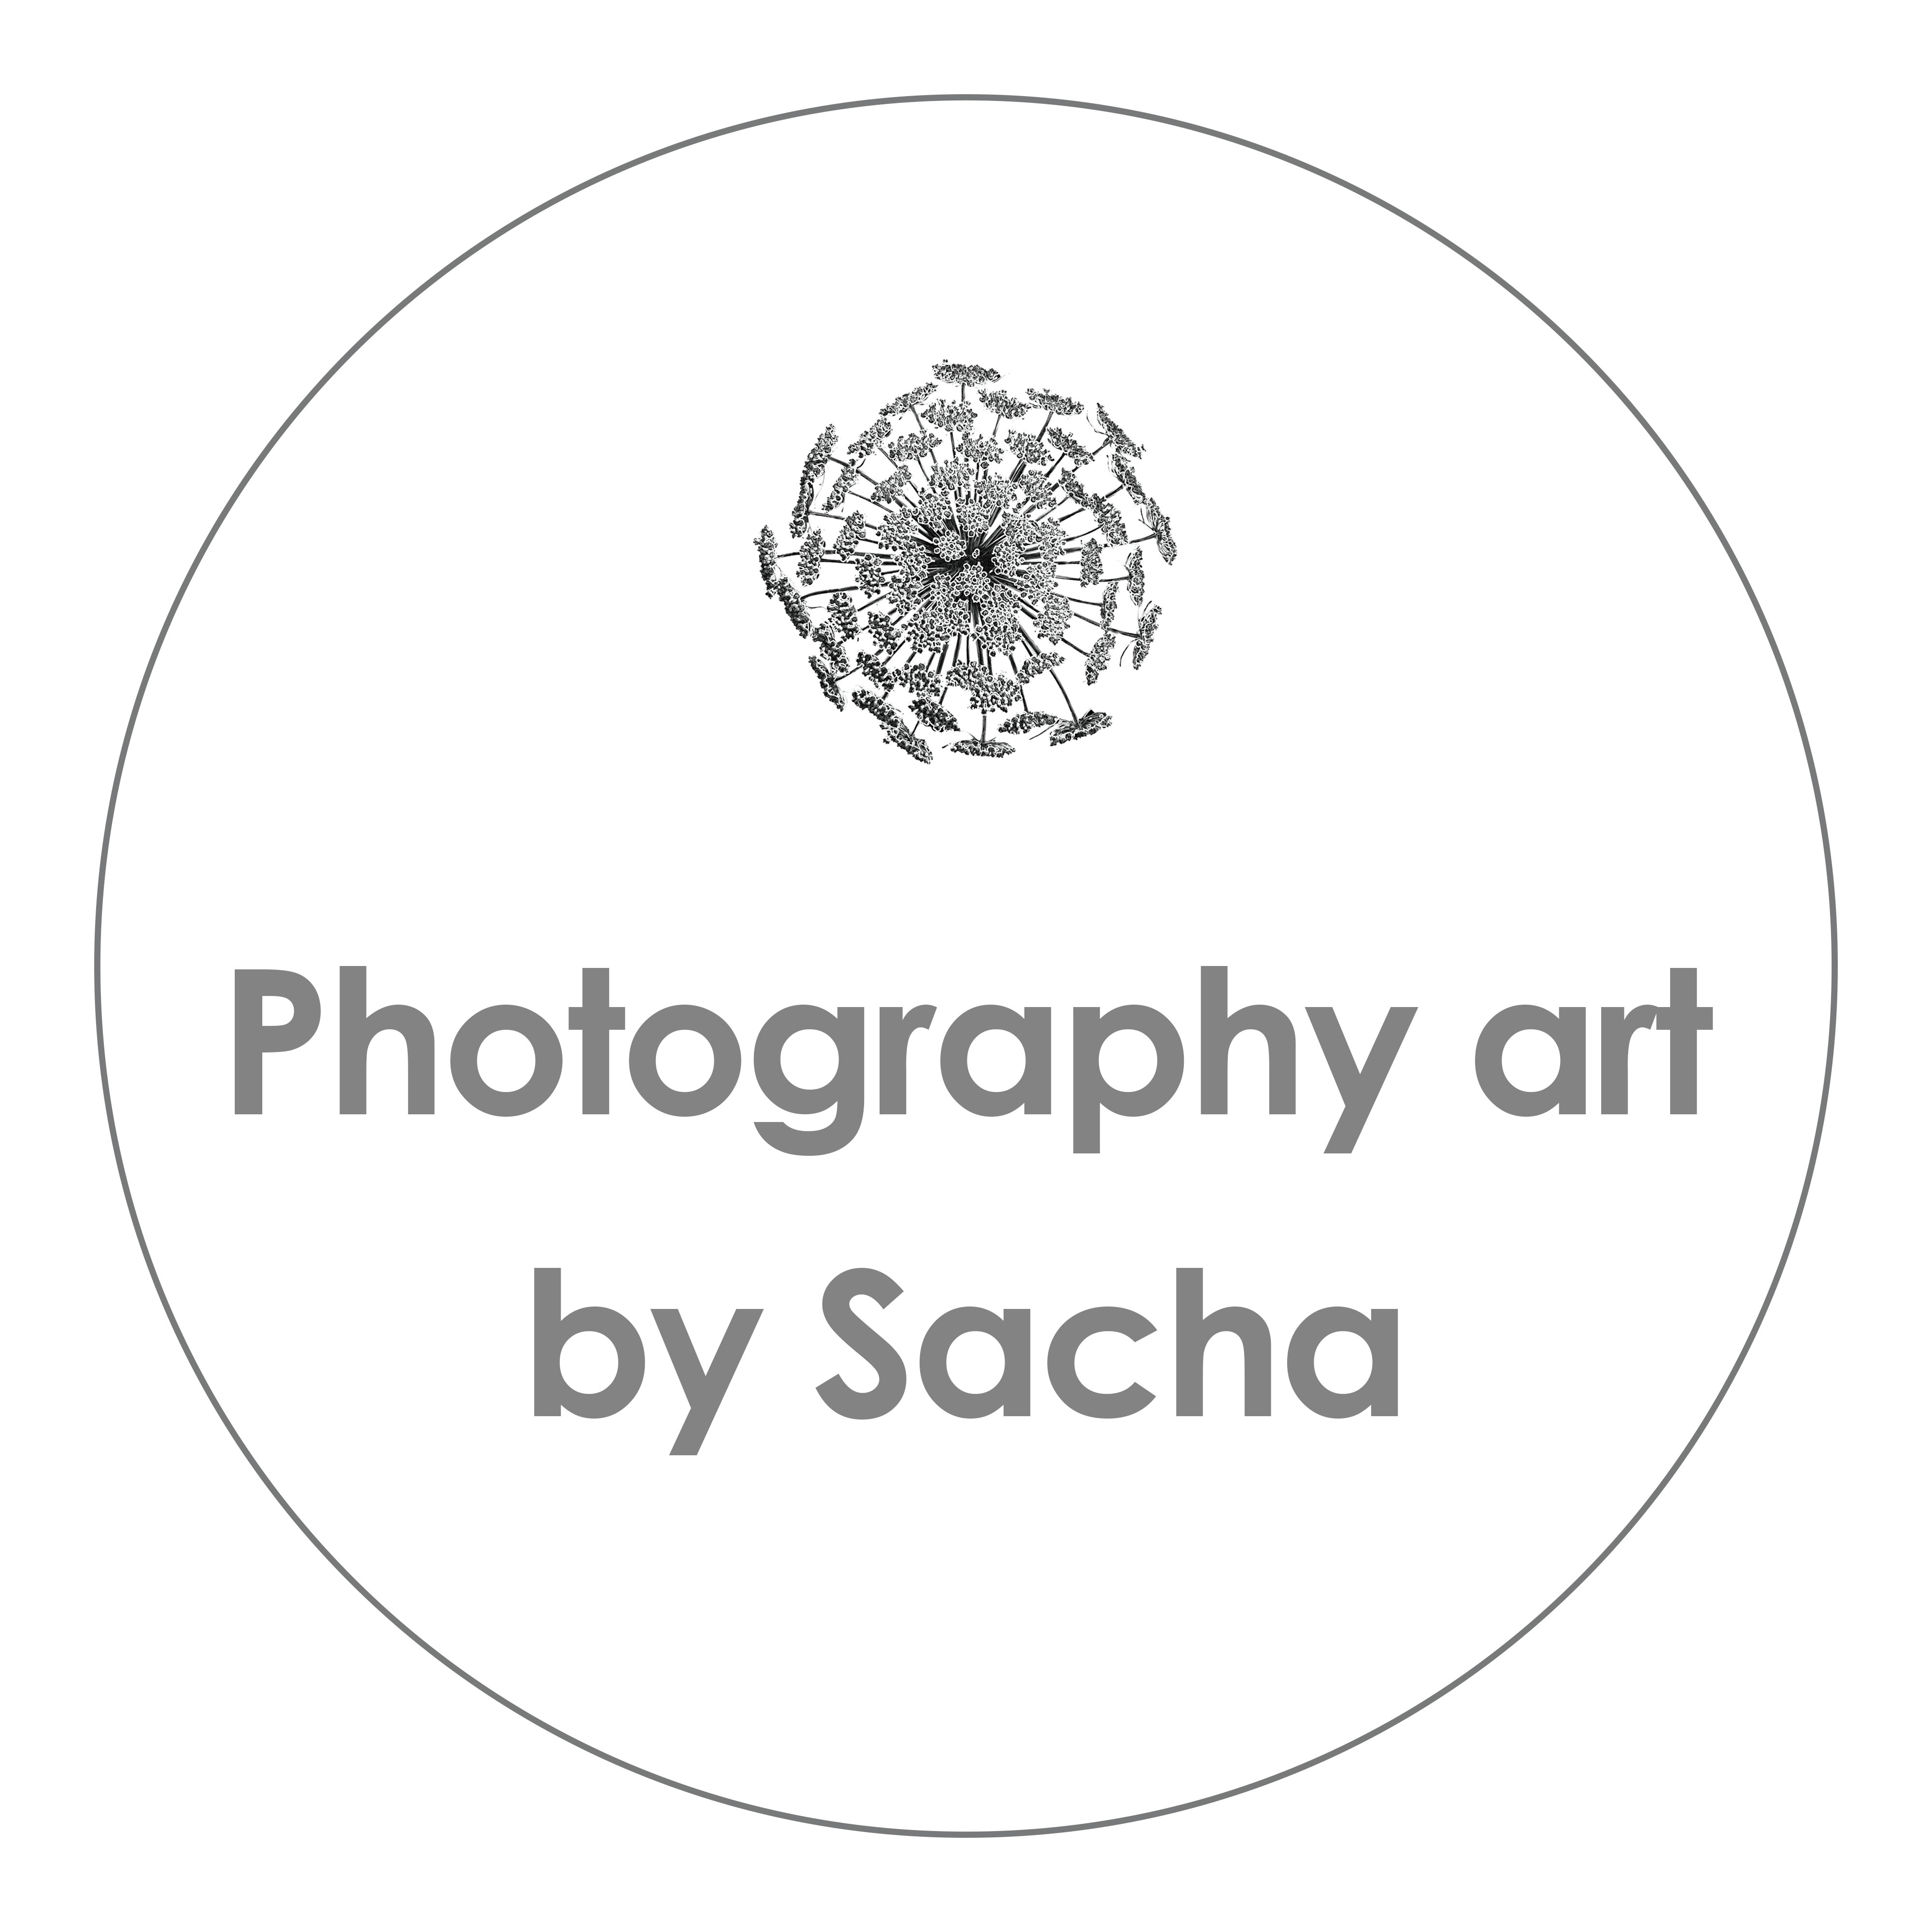 Photography art by Sacha